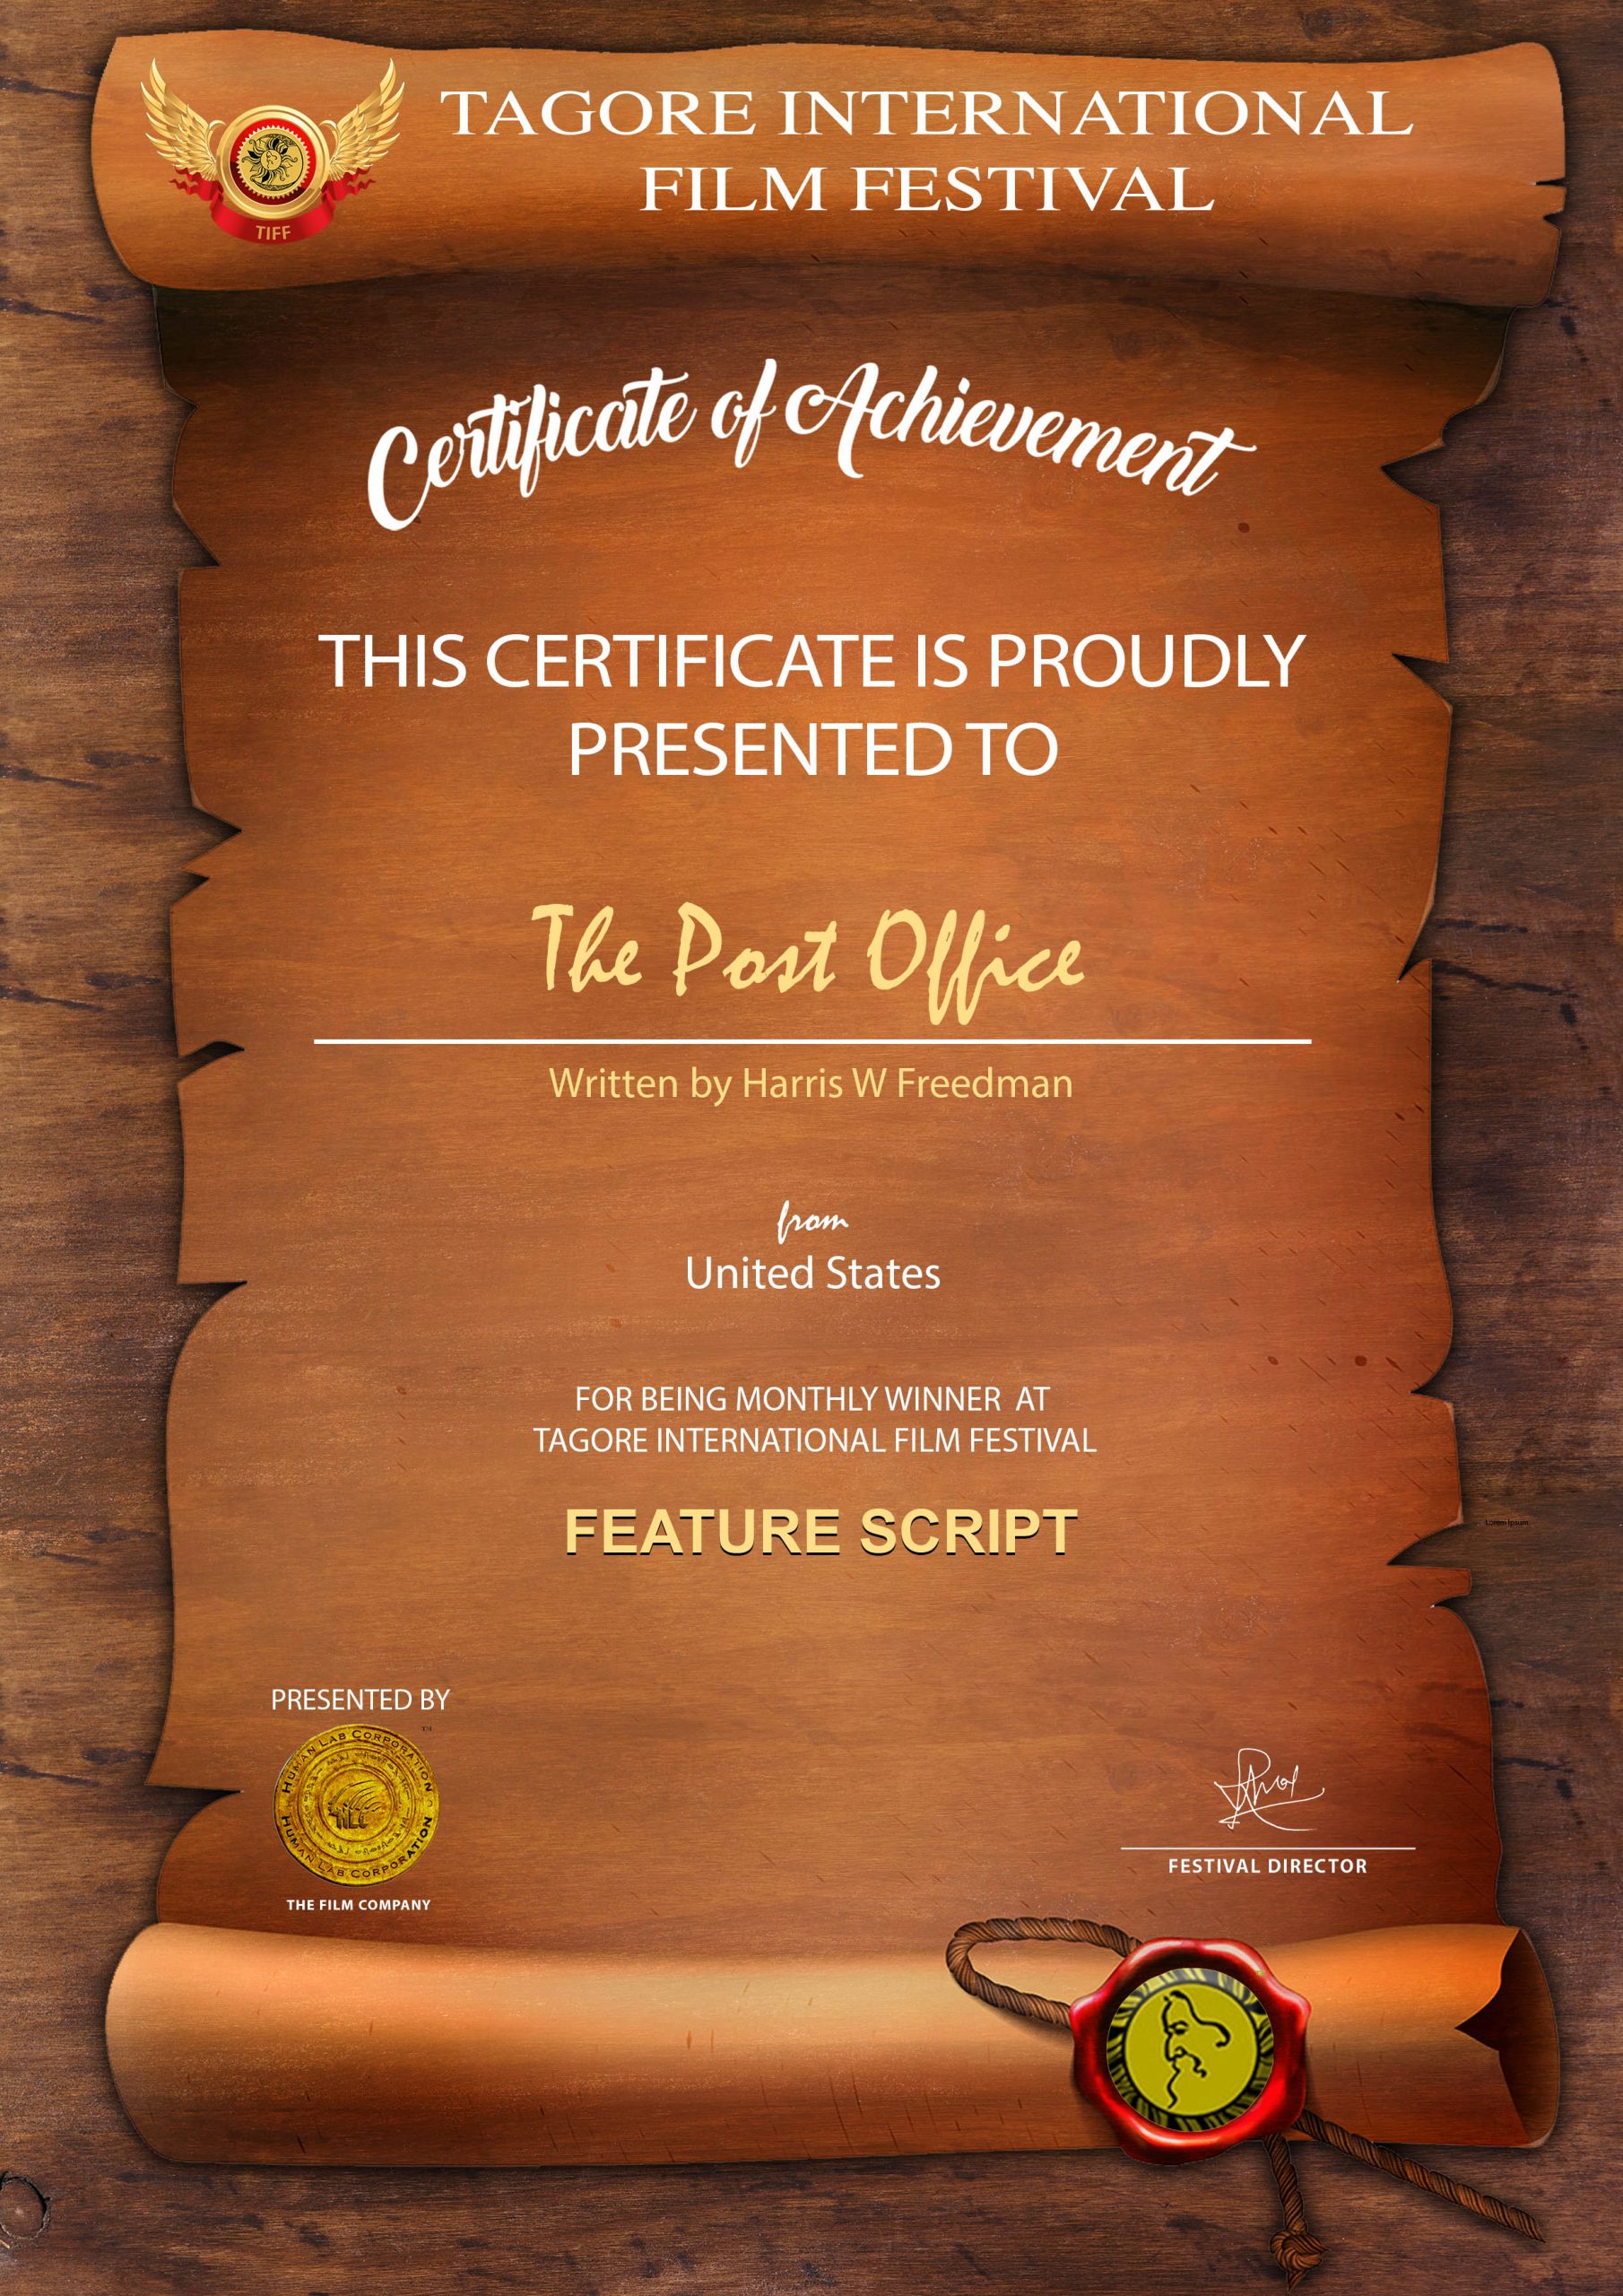 The Post Office – Award Winner – Tagore International Film Festival